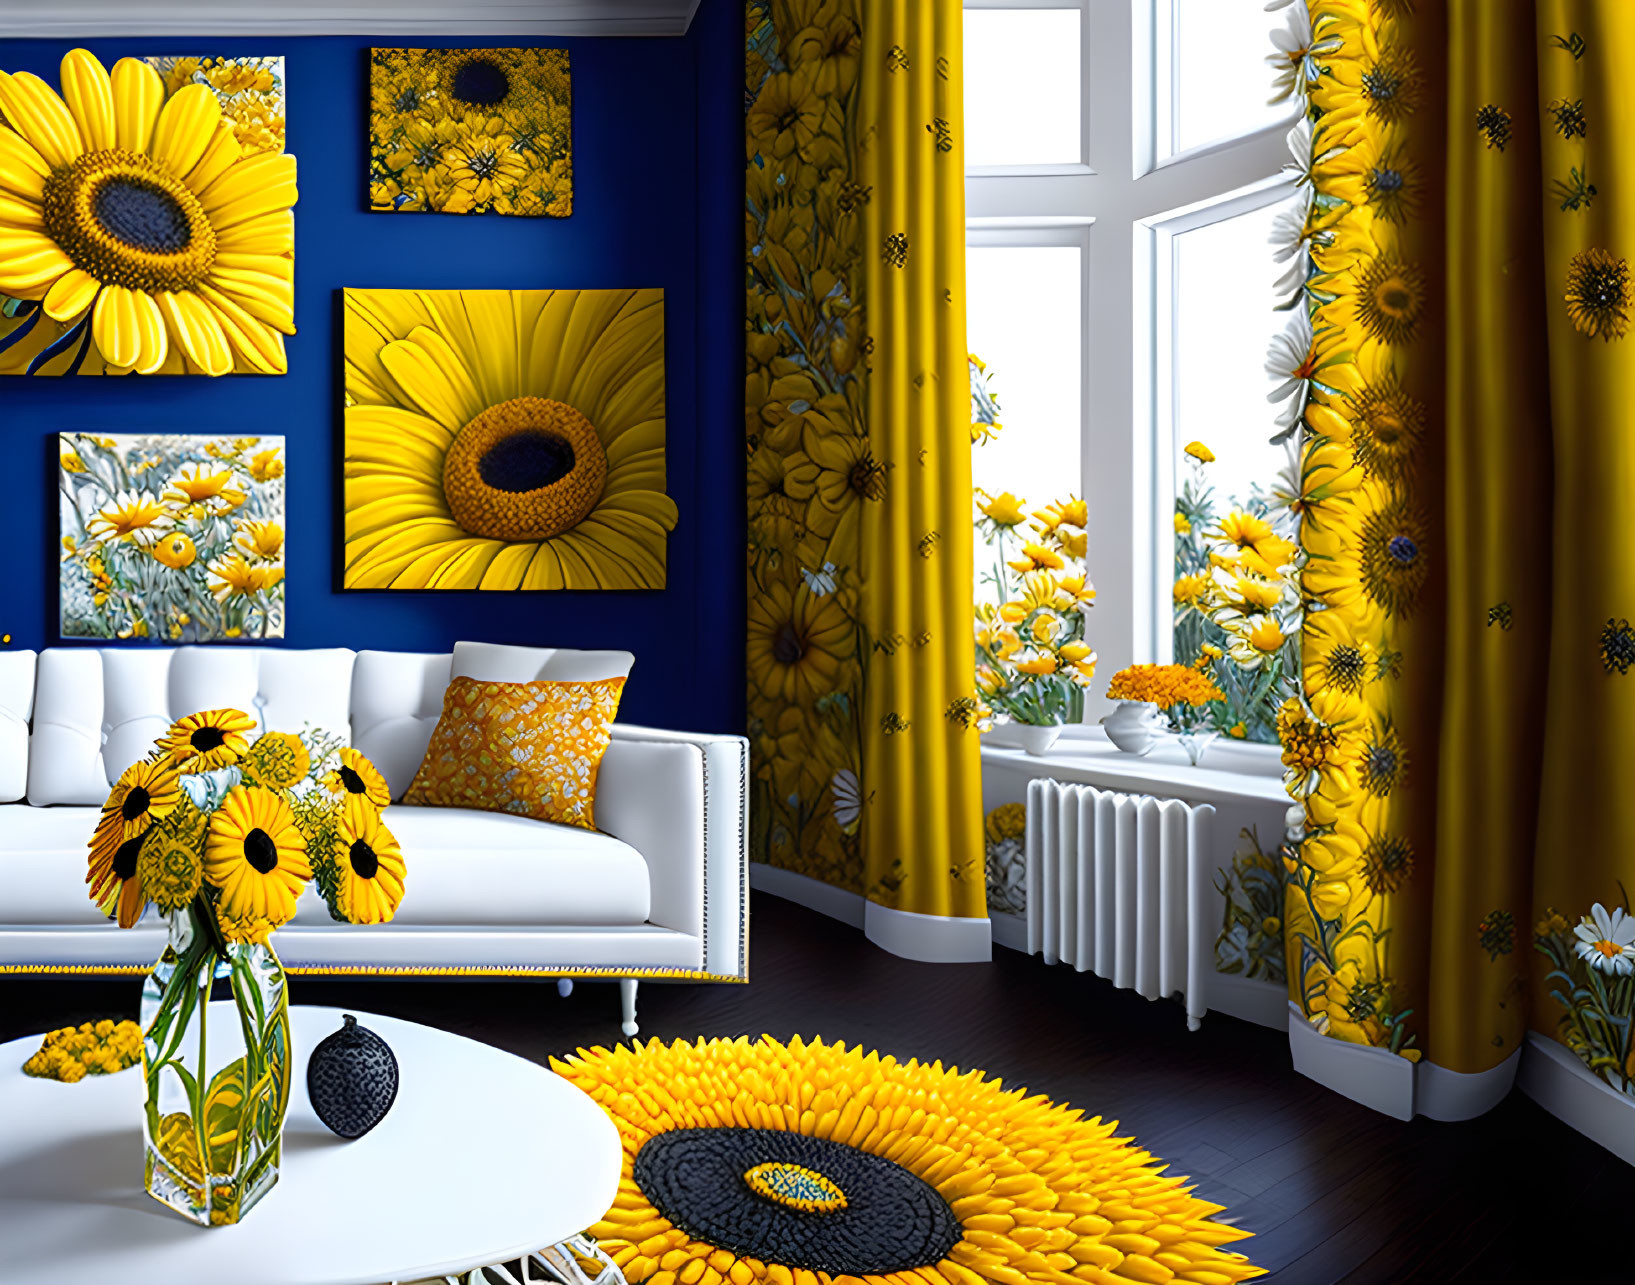 Bright White Sofa Room with Sunflower Decor